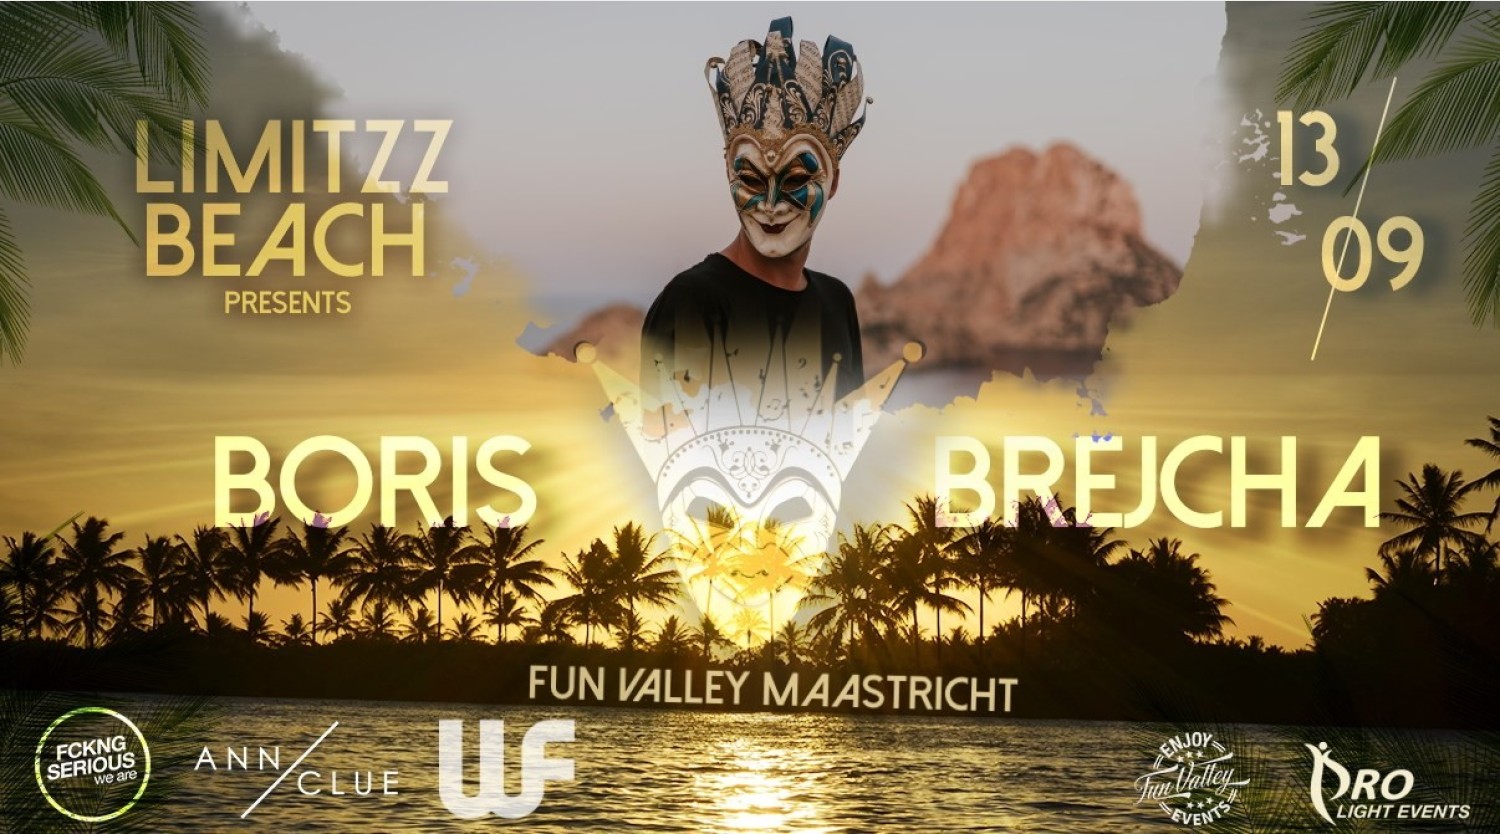 Party nieuws: Limitzz Beach presenteert Boris Brejcha